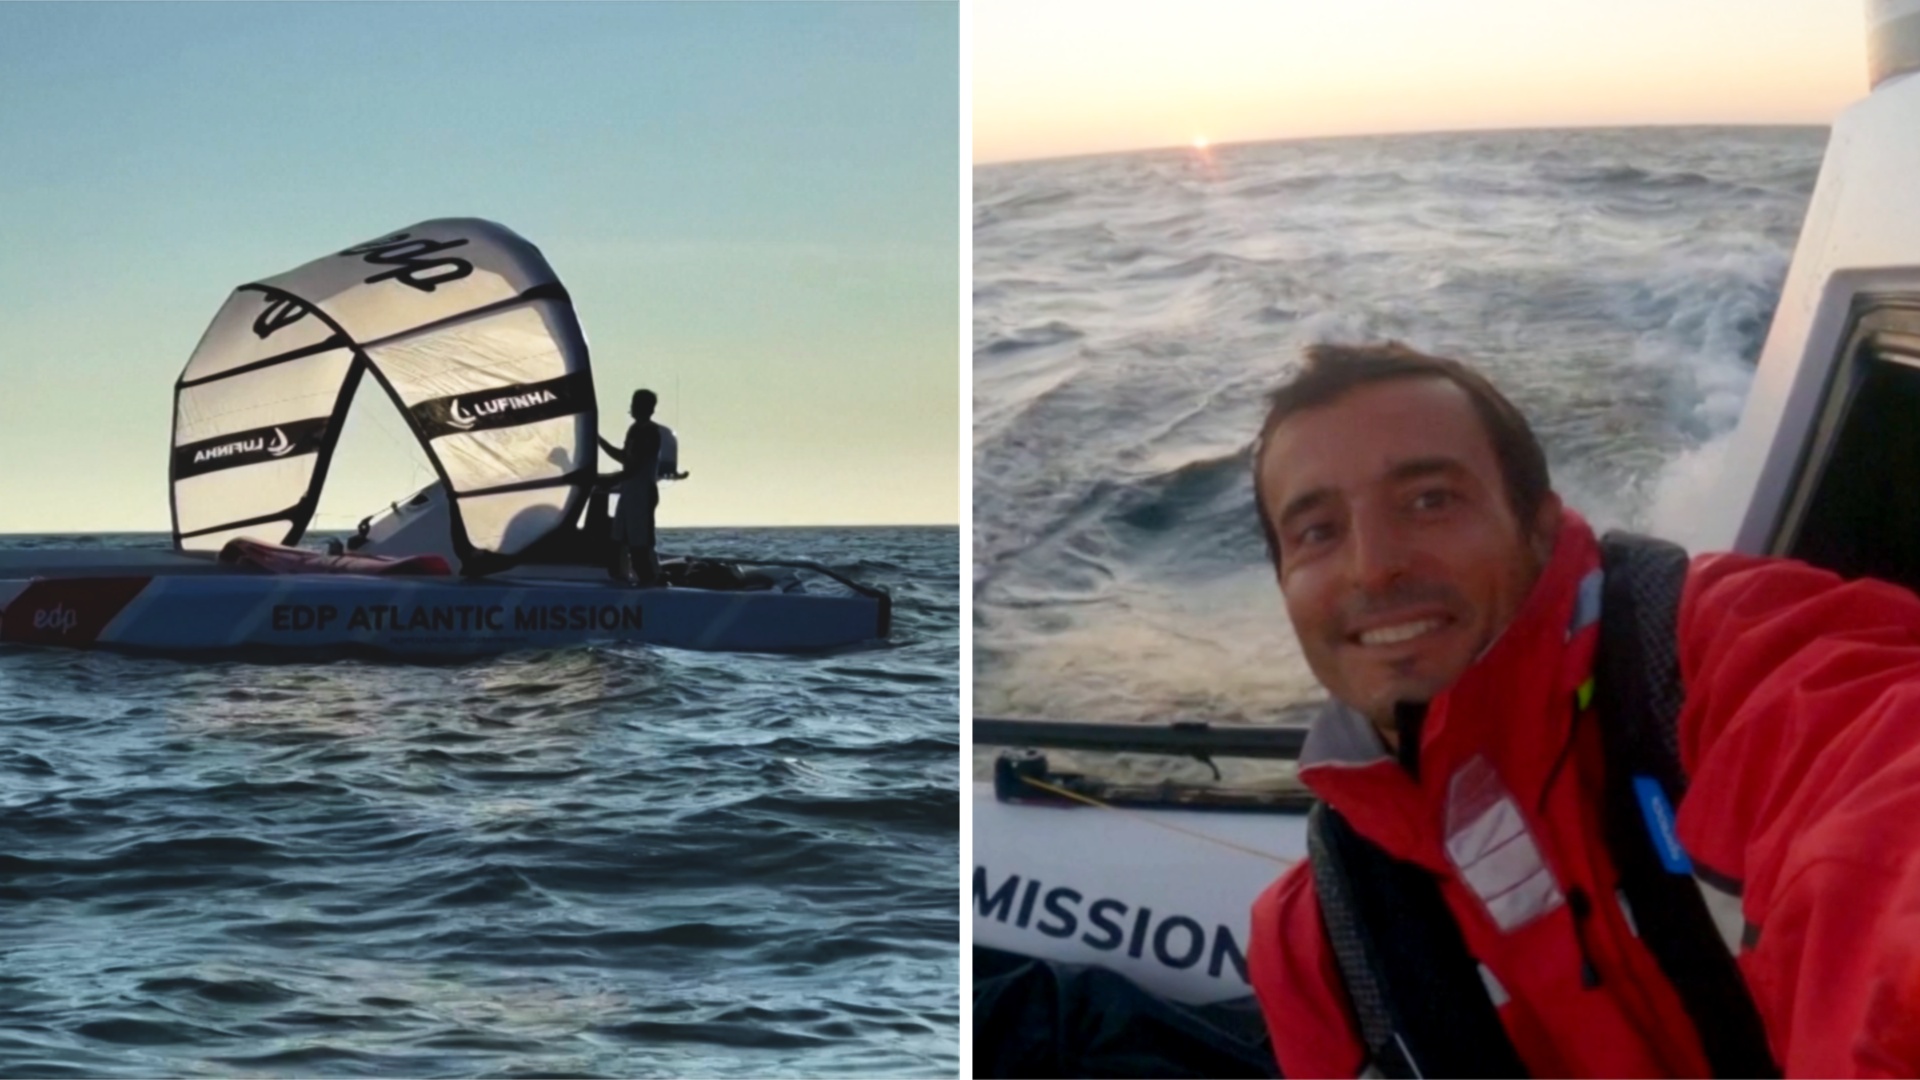 Через Атлантику – в одиночку: португалец проплывёт на тримаране 6000 км